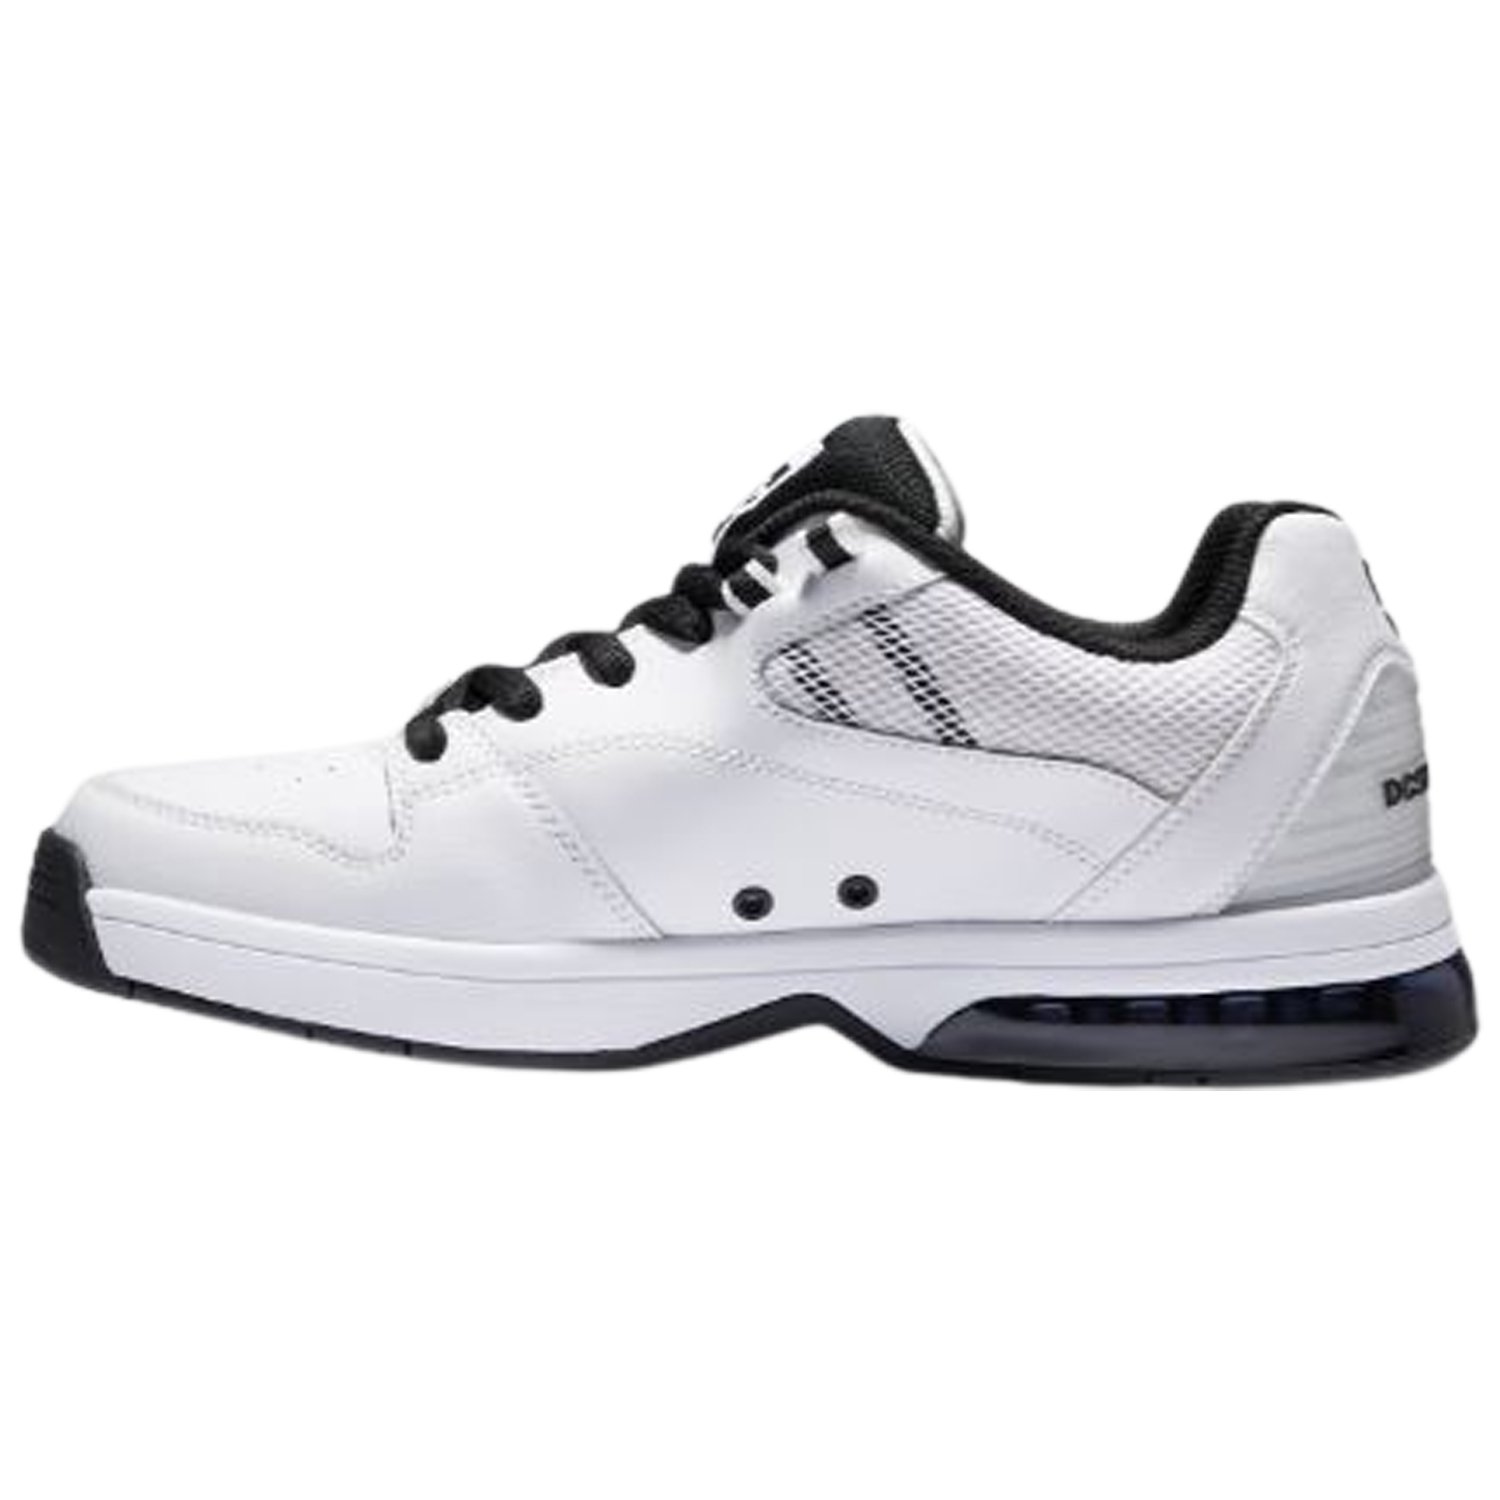 Tênis Dc Shoes Versatile Masculino -  Branco e Preto Branco 2